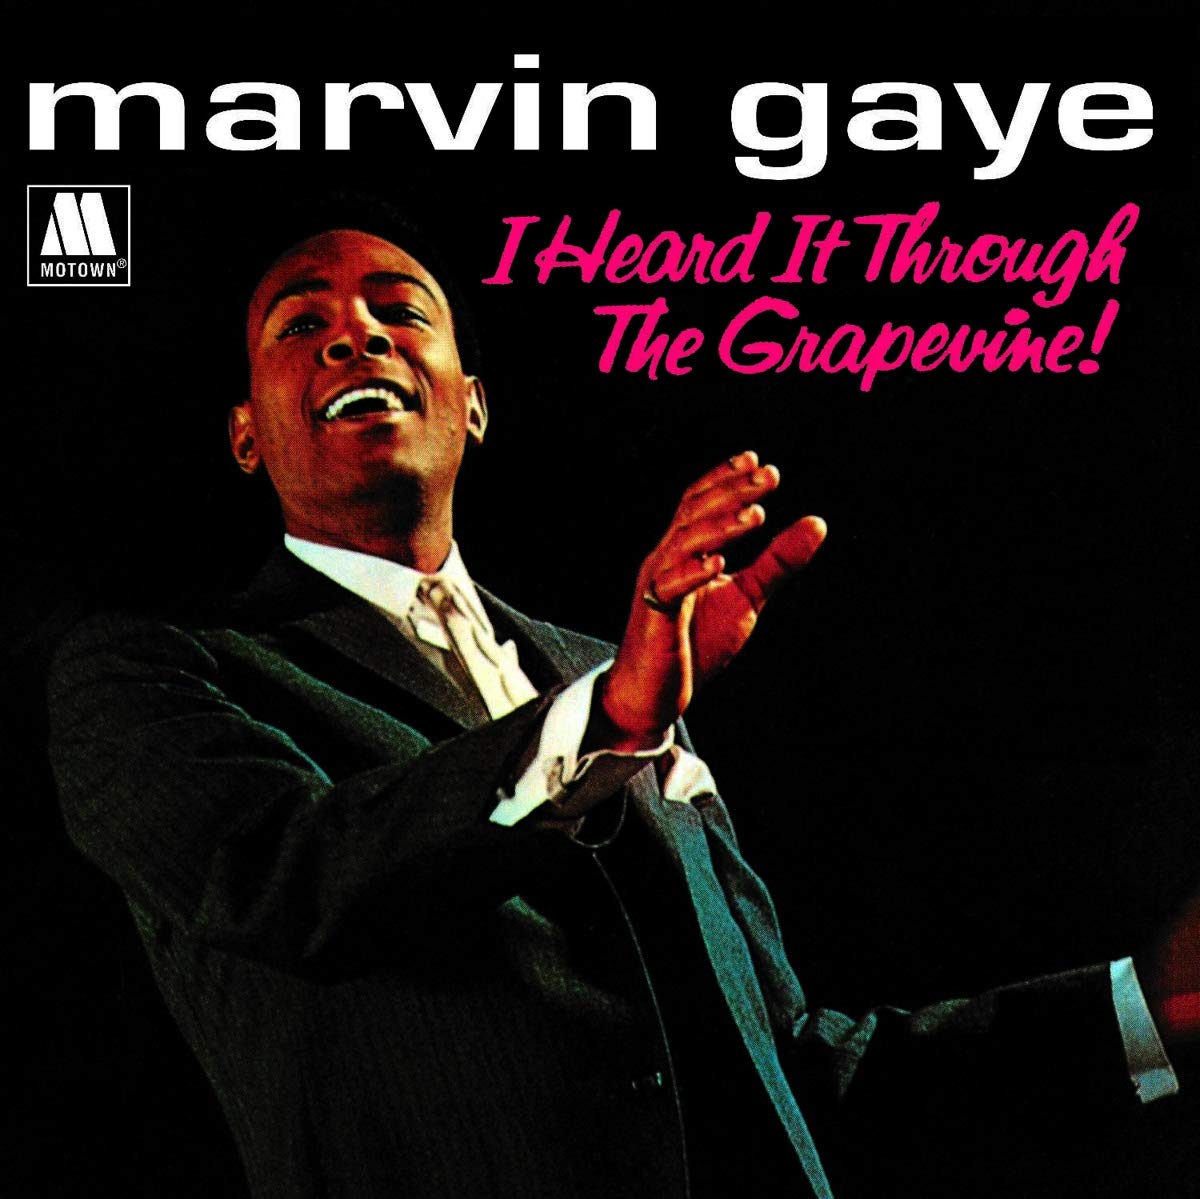 MARVIN GAYE - I HEARD IT THROUGH THE GRAPEVINE Vinyl LP